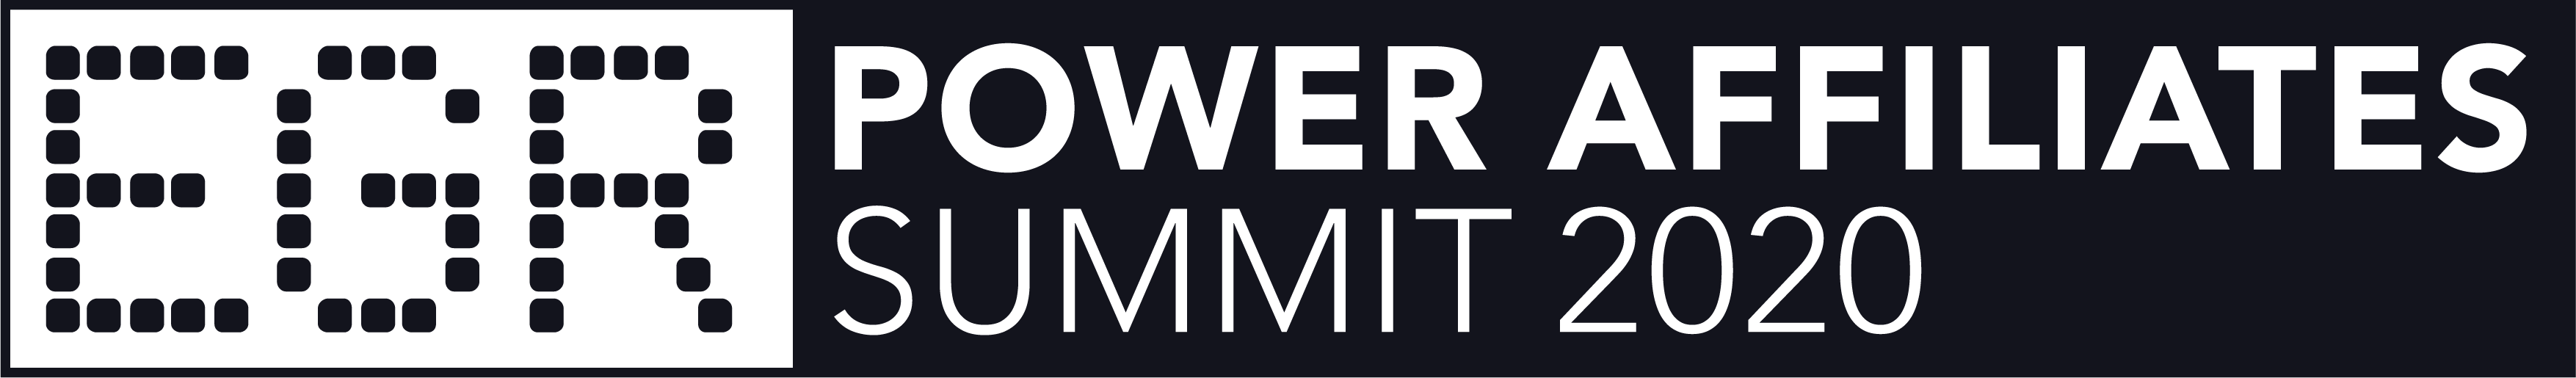 EGR Power Affiliates Summit 2020